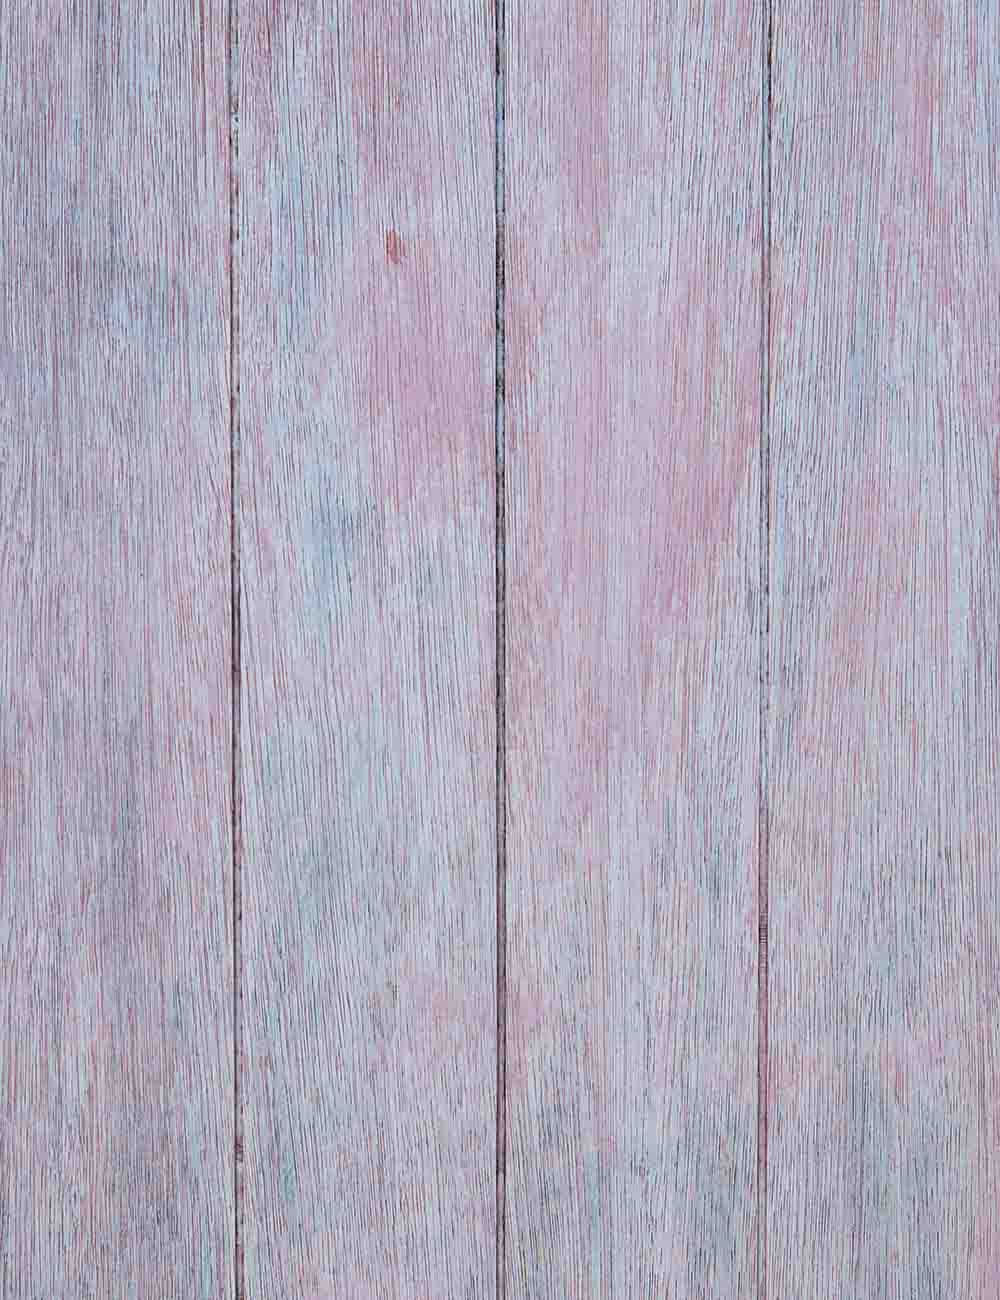 Senior Pearl Pink Wood Floor Backdrop For Photography Shopbackdrop